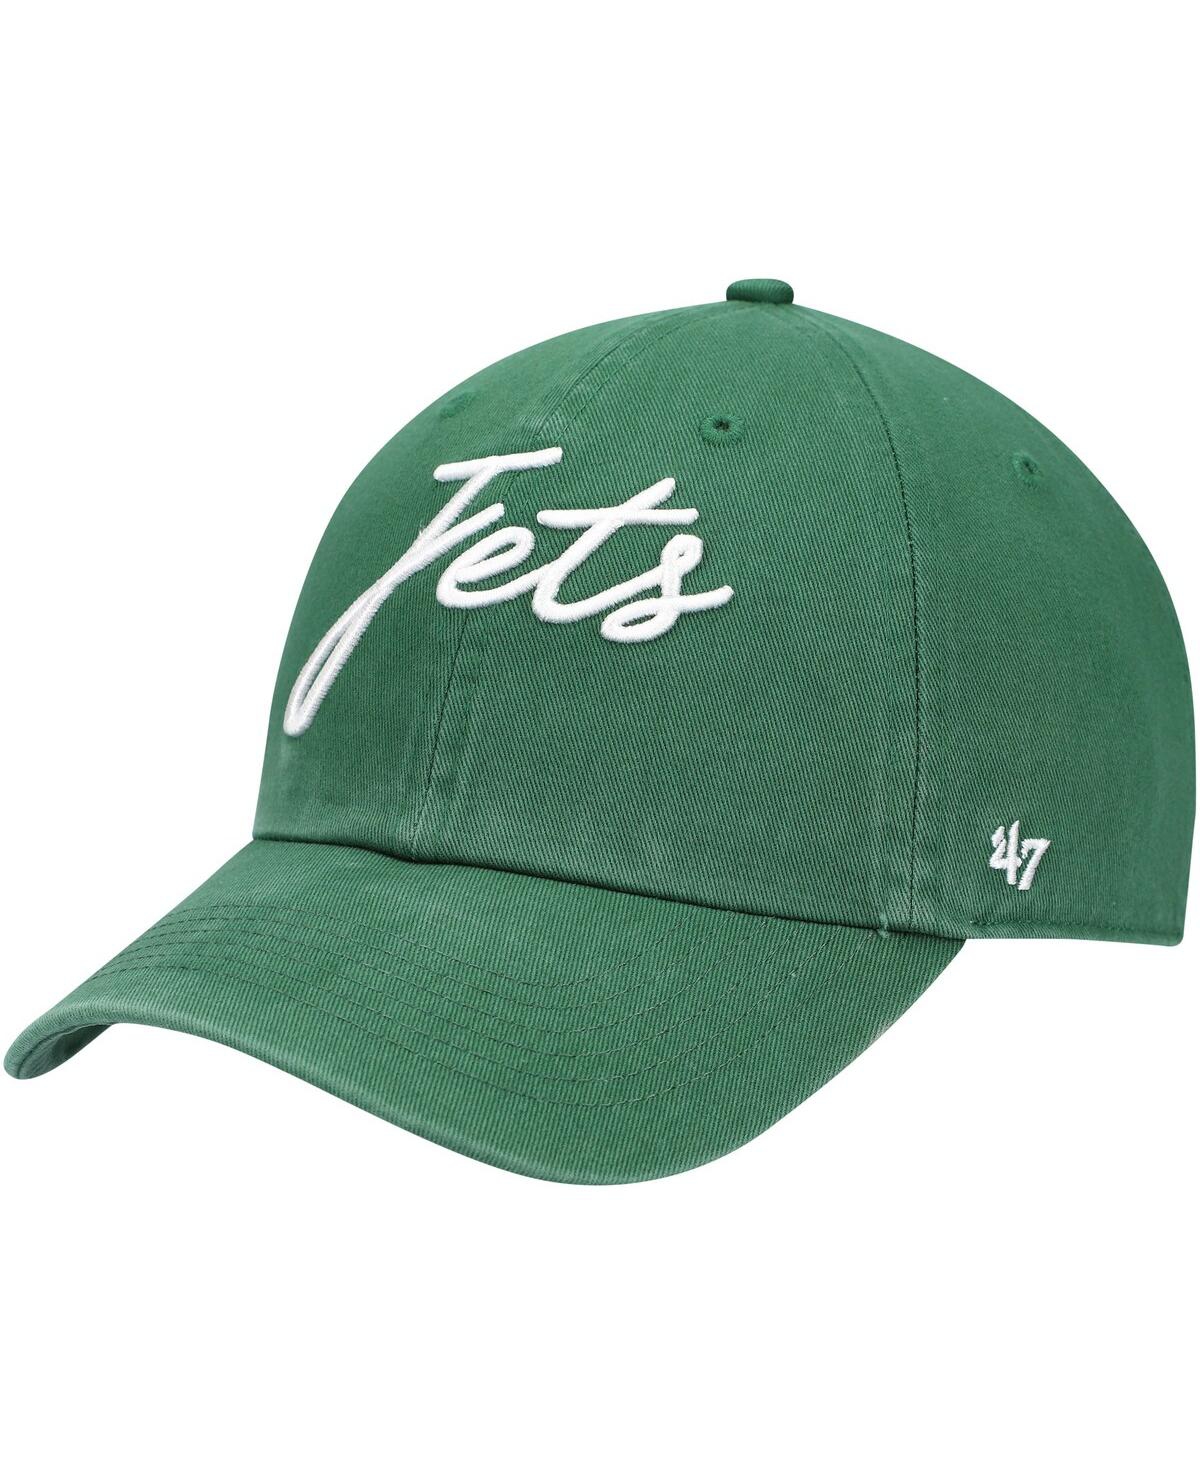 Shop 47 Brand Women's '47 Green New York Jets Vocal Clean Up Adjustable Hat